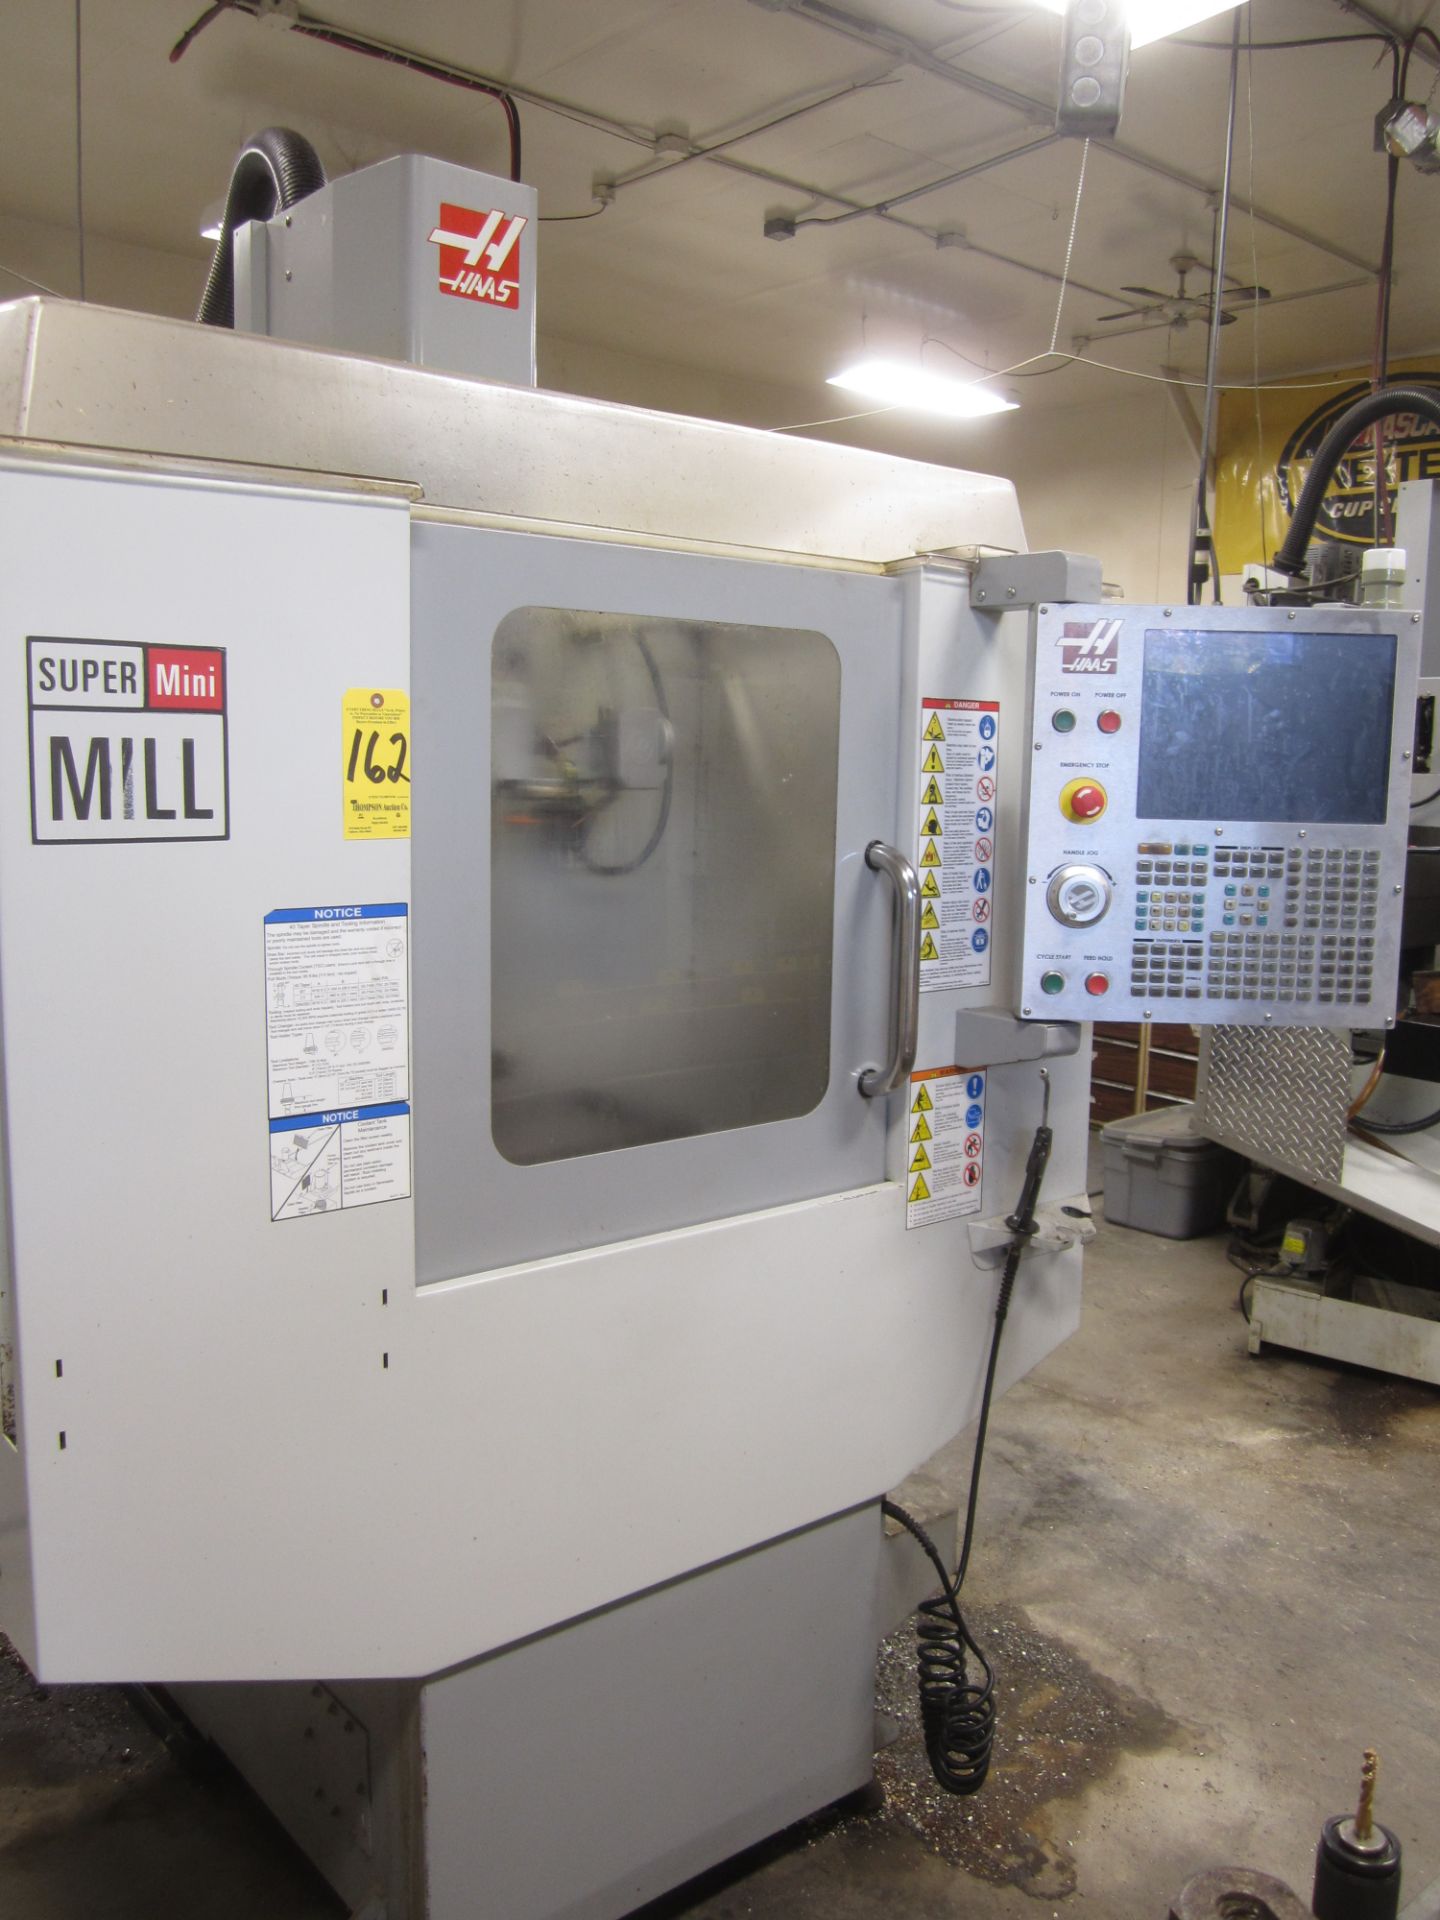 Haas Super Mini Mill CNC Vertical Mill, s/n 1071266, New 2008, Haas CNC Control, 40 Taper, 10 ATC, - Image 2 of 11